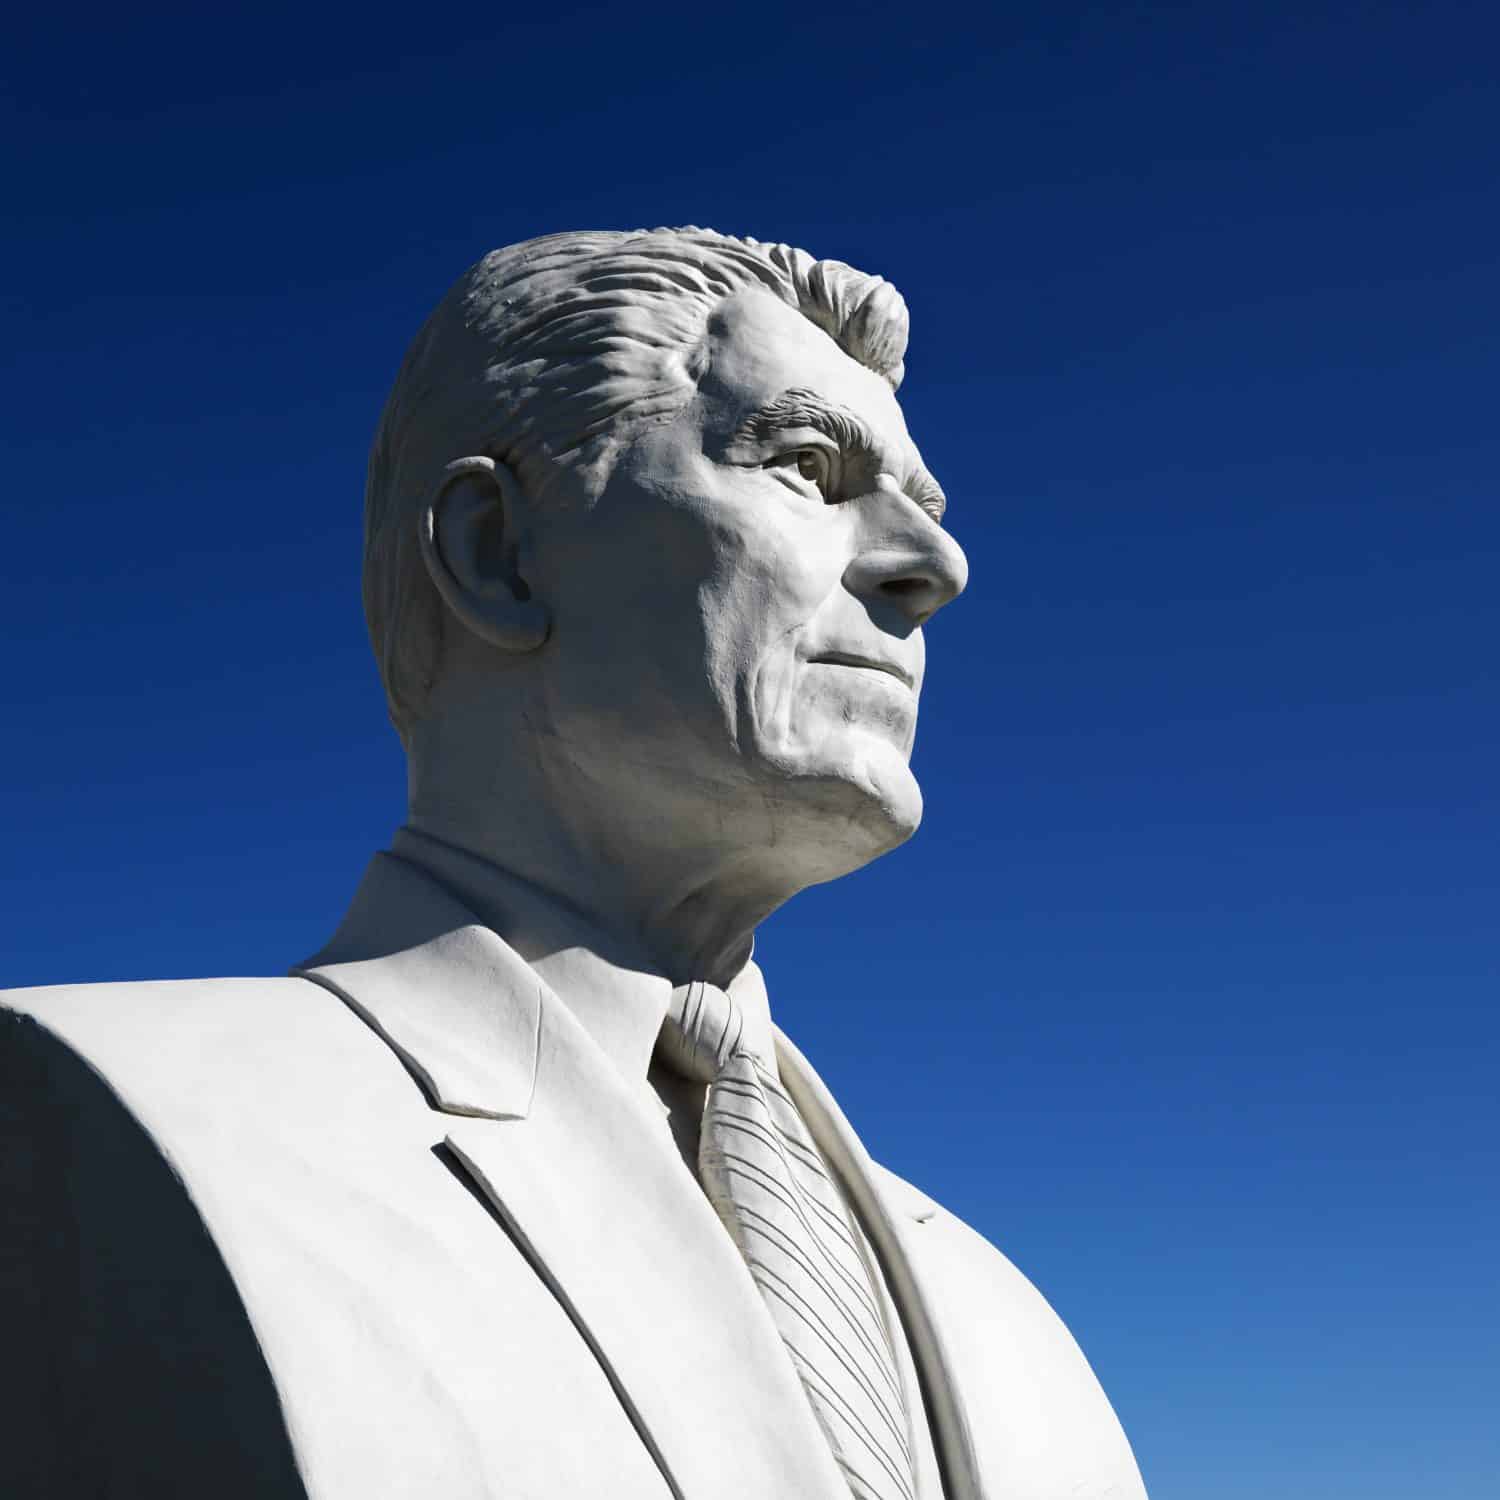 Bust of Ronald Reagan sculpture against blue sky in President's Park, Black Hills, South Dakota.